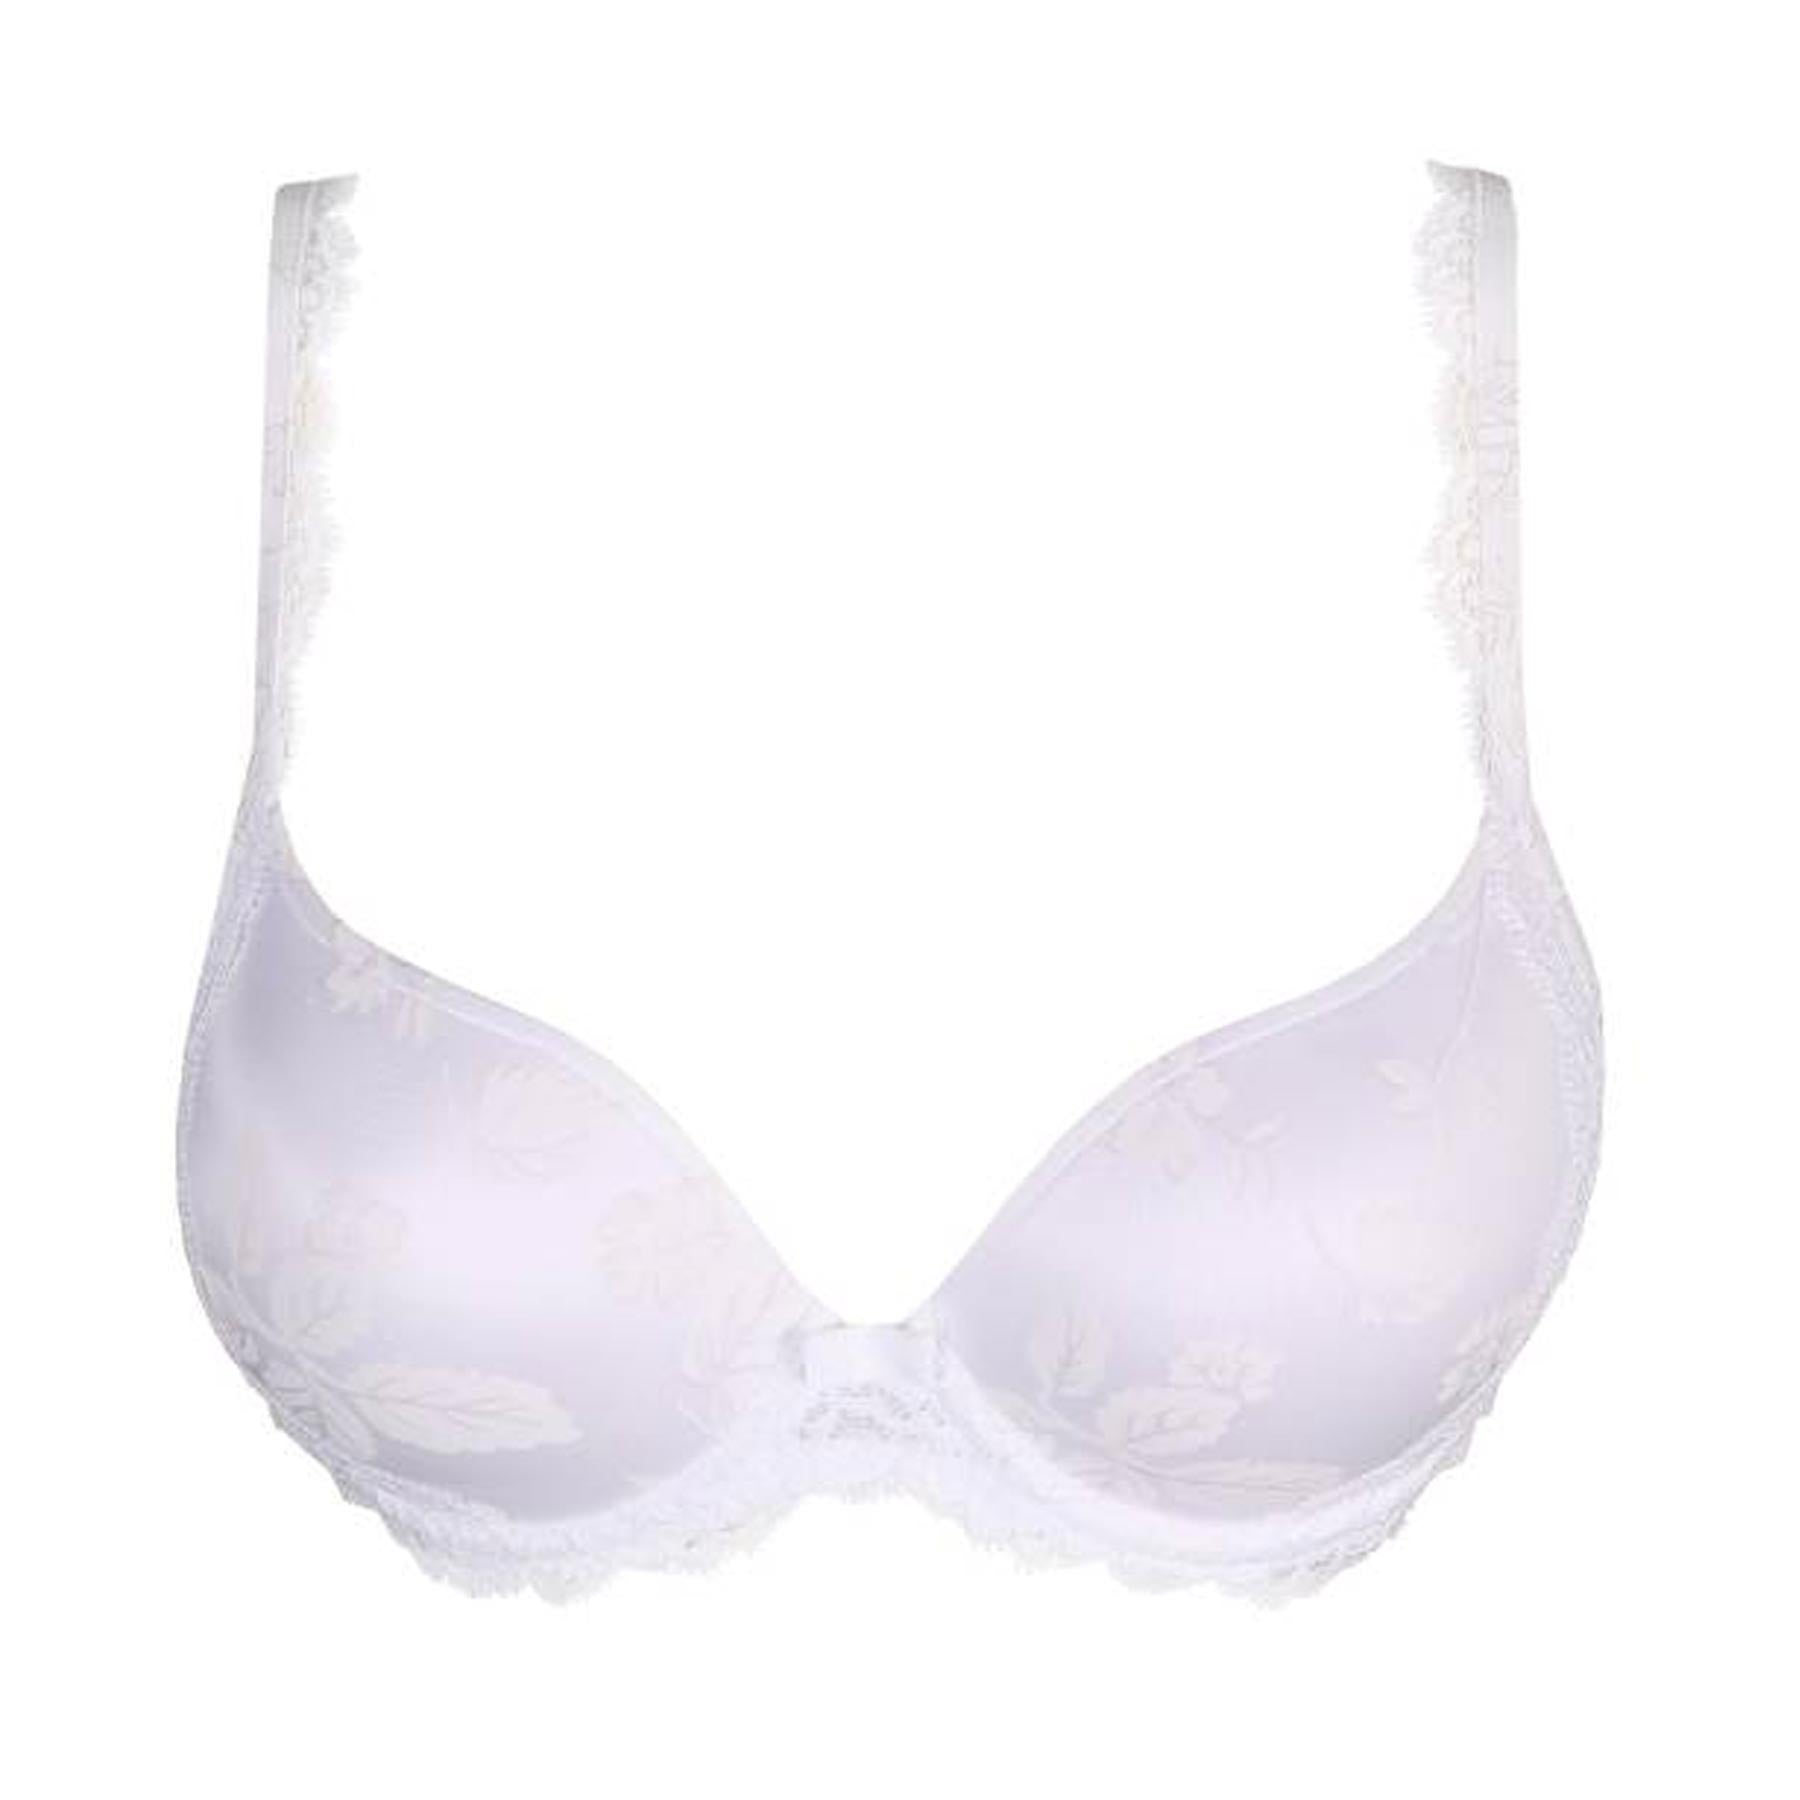 Buy Online Women Underwired Push Up Bra Panty Set - White 1543 at